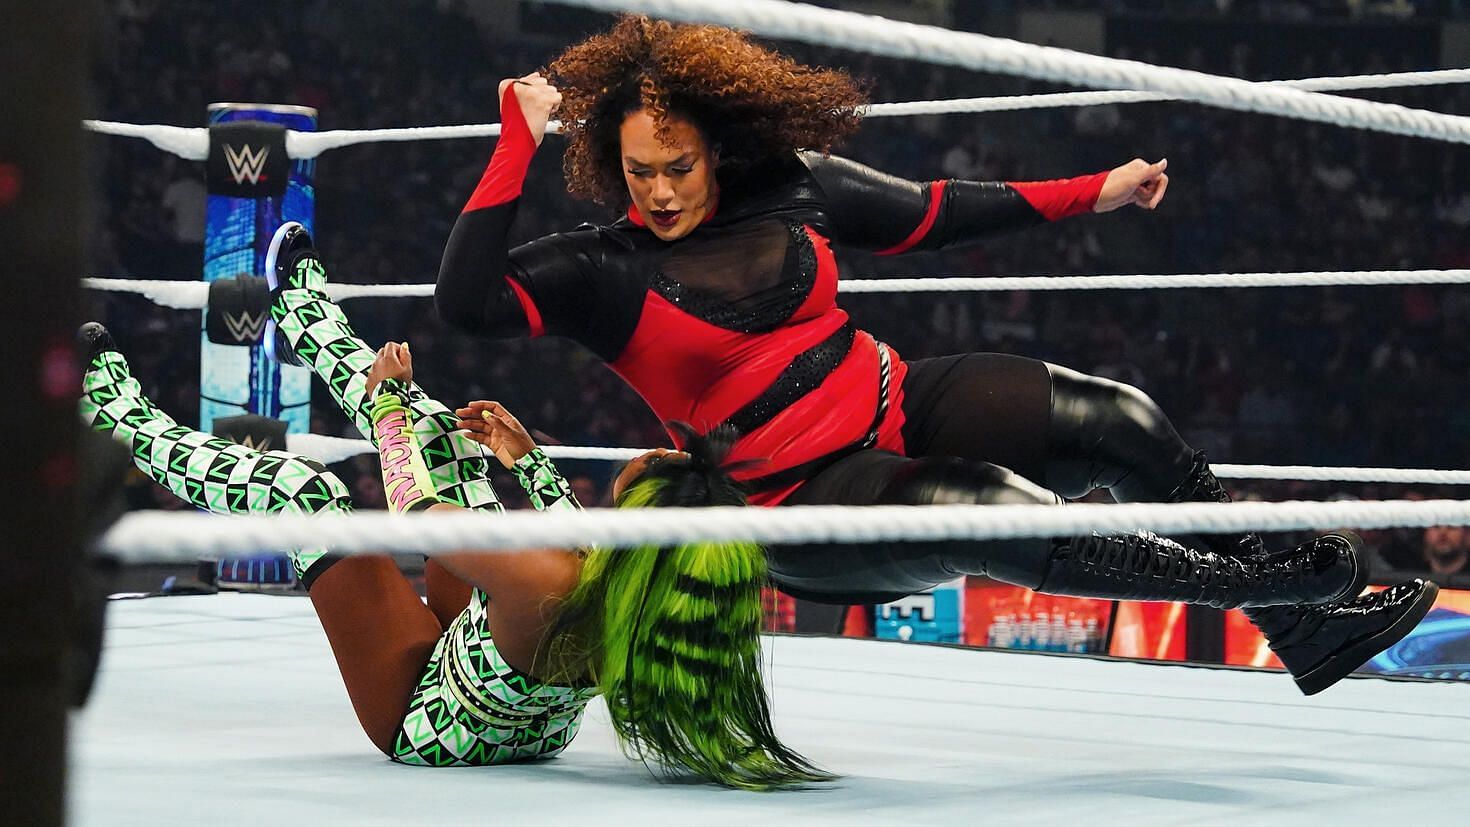 Nia Jax defeated Naomi this week on SmackDown